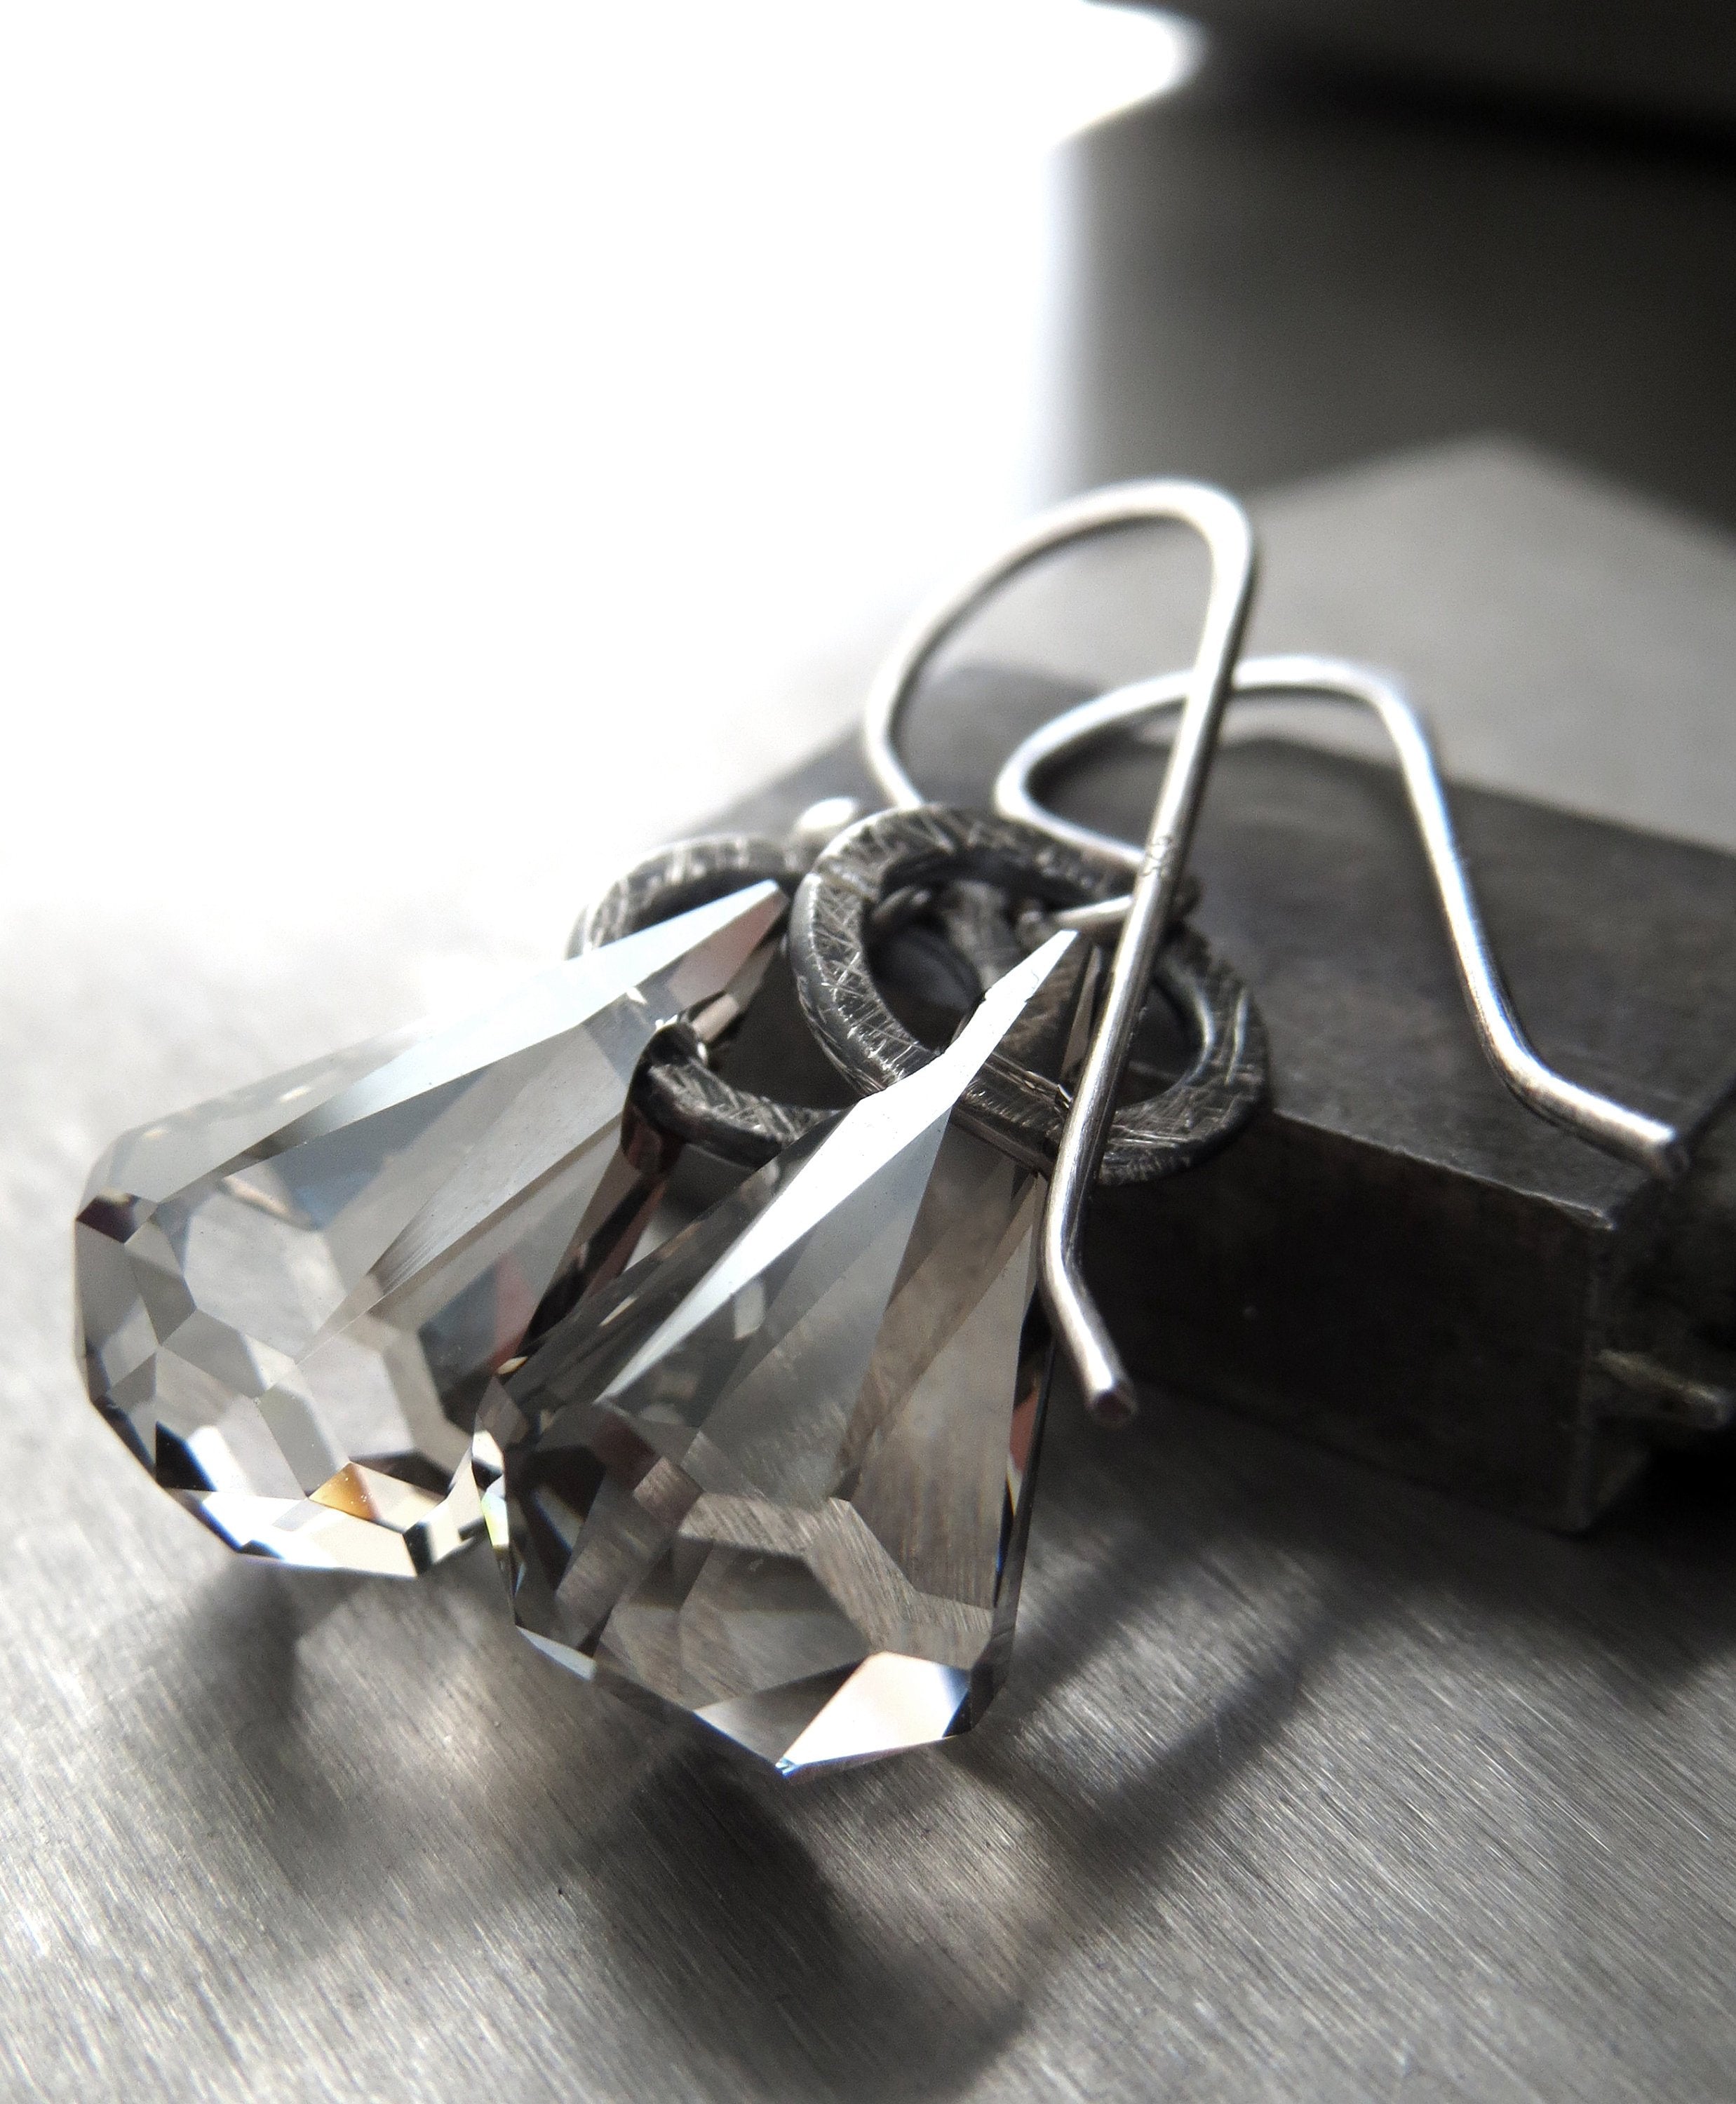 STRIKE - Small Earrings with Sheer Grey Swarovski Crystals, Oxidized Sterling Silver - Geometric Minimalist Modern Sterling Silver Jewelry